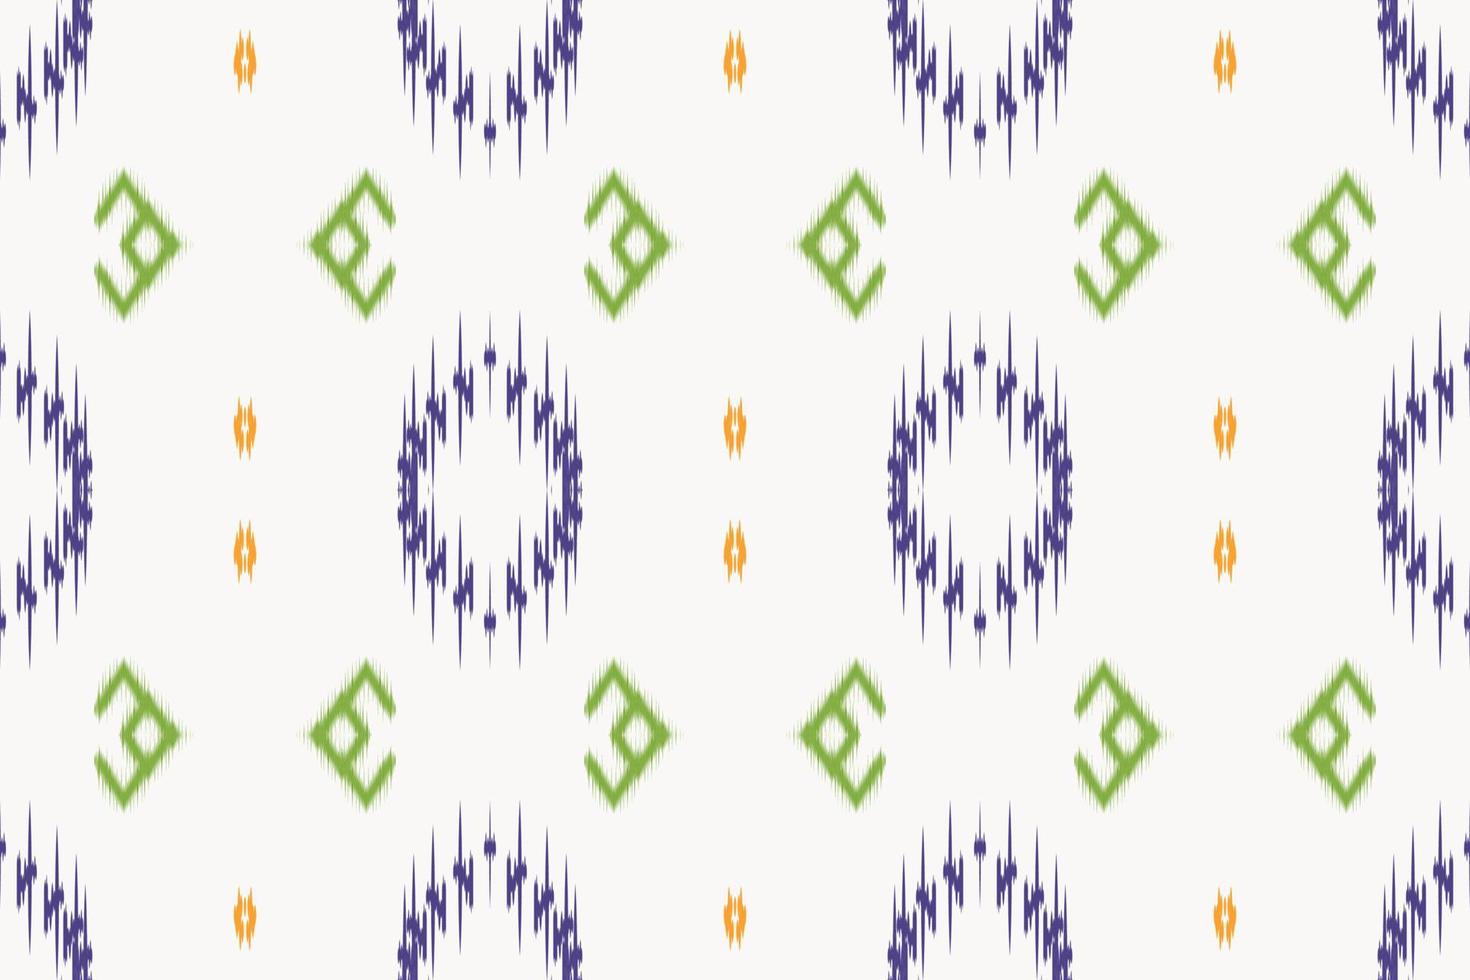 ikat tessuto tribale astratto senza soluzione di continuità modello. etnico geometrico batik ikkat digitale vettore tessile design per stampe tessuto saree Mughal spazzola simbolo andane struttura Kurti kurtis kurtas